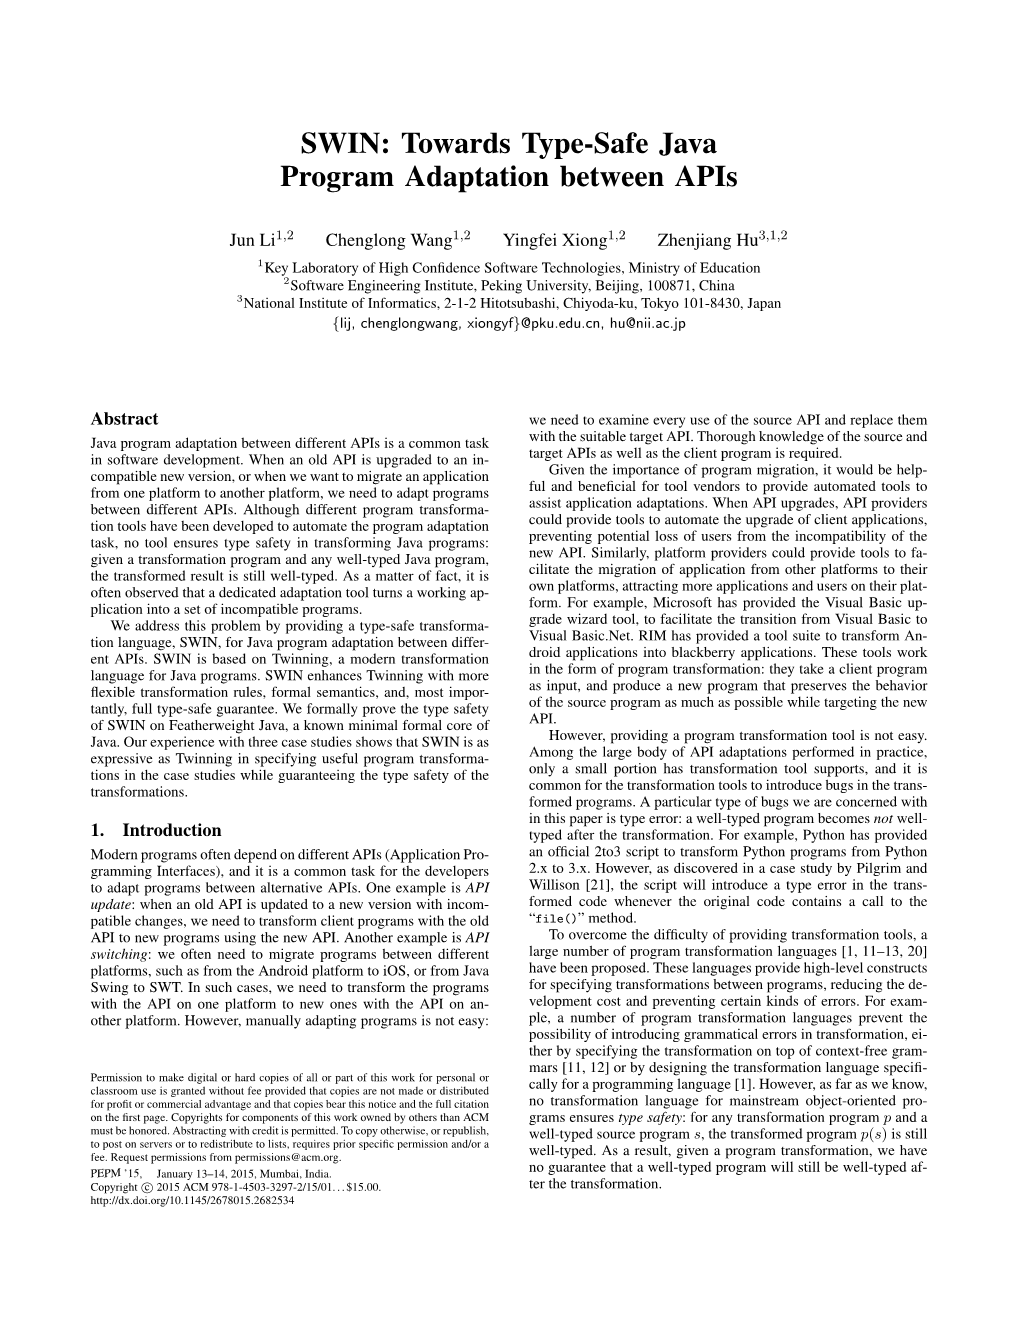 SWIN: Towards Type-Safe Java Program Adaptation Between Apis